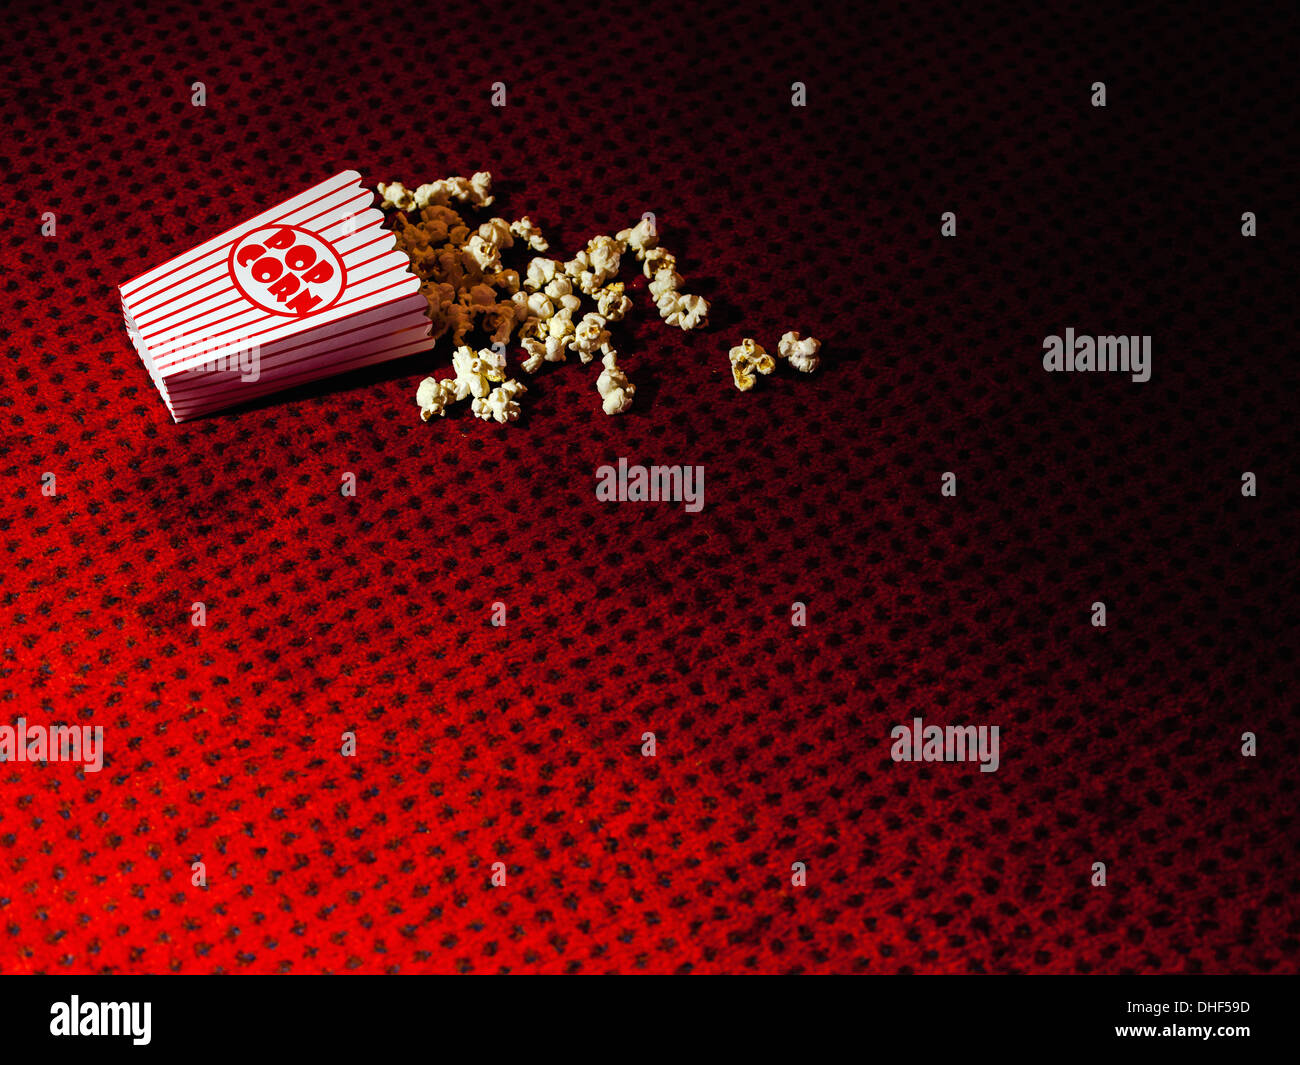 Spilled carton of popcorn on cinema carpet Stock Photo